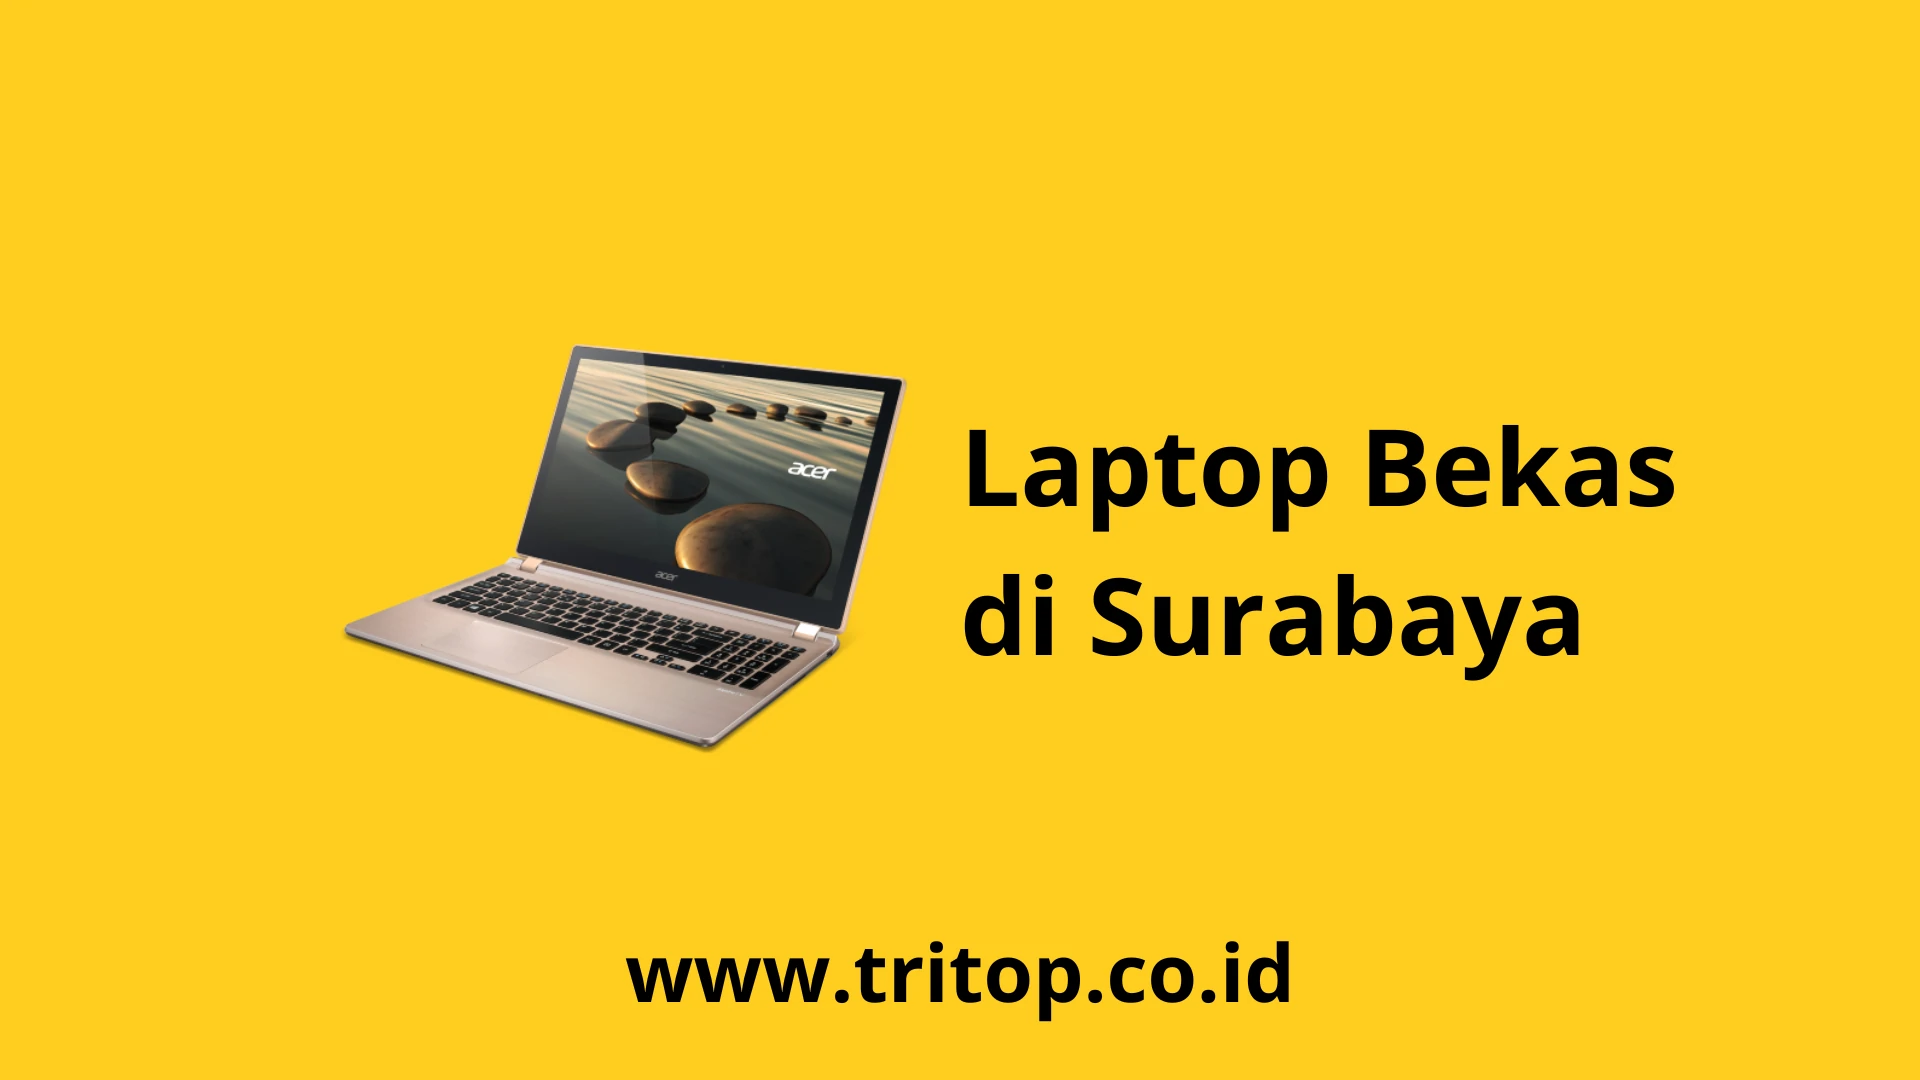 Laptop Bekas Surabaya Tritop.co.id